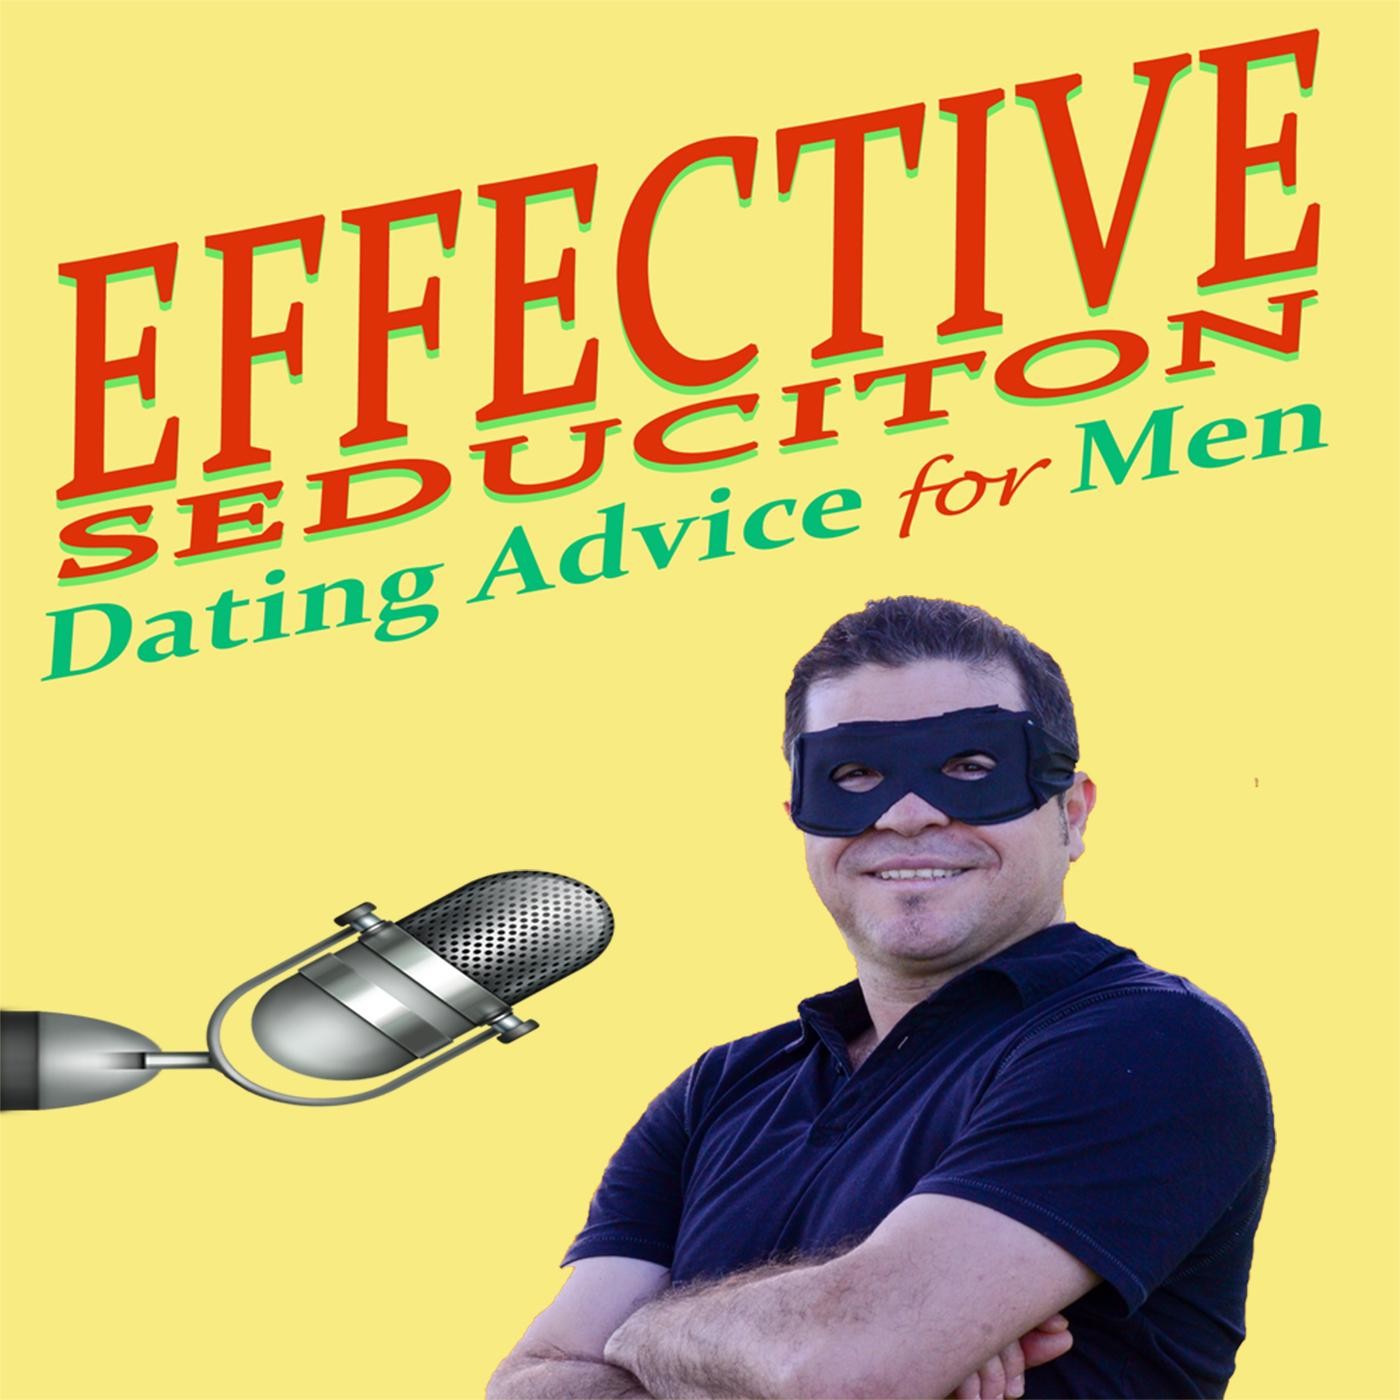 Effective Seduction, Dating advice for men